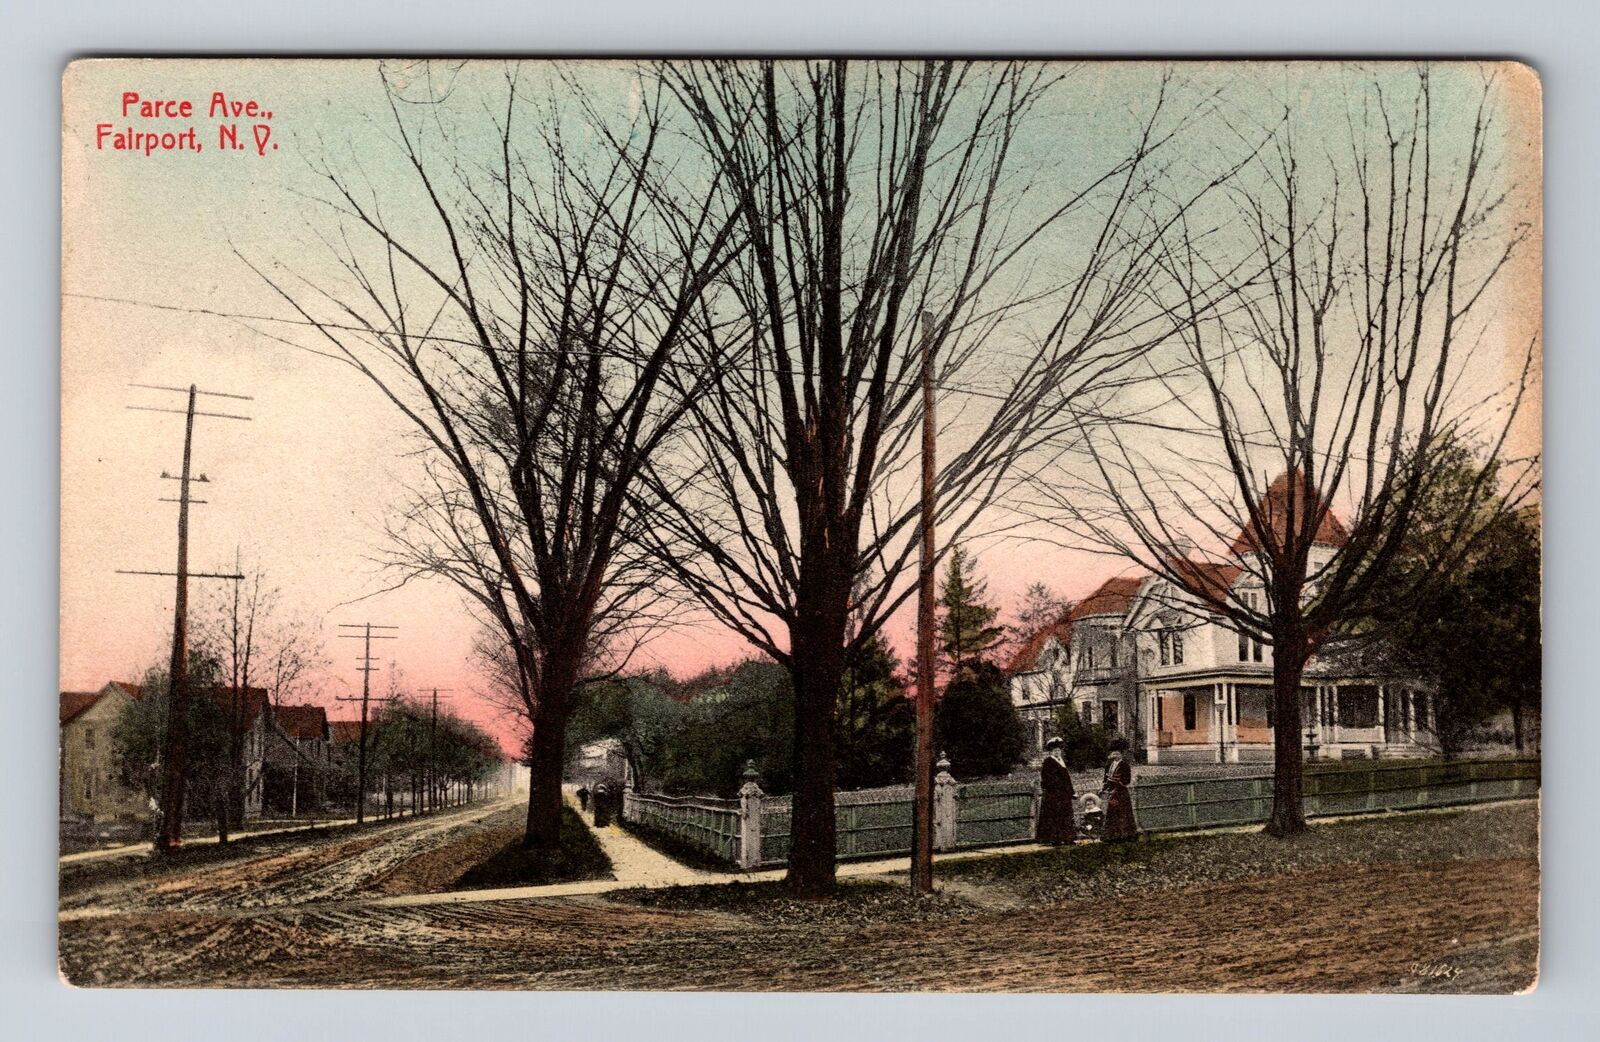 Fairport NY-New York, Residences On Parce Avenue, Antique Vintage Postcard